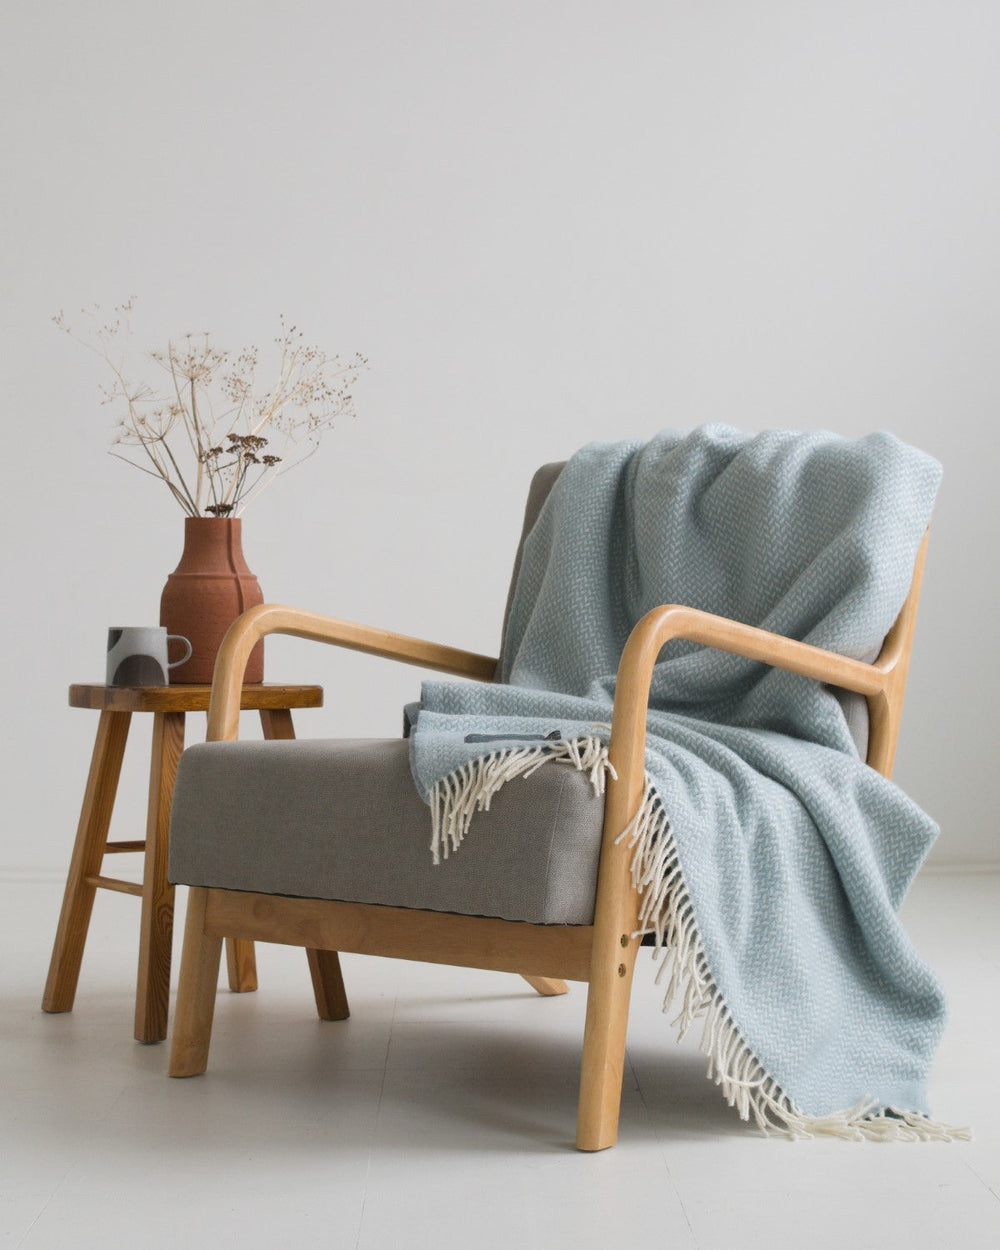 Extra large blue herringbone wool blanket draped over a lounge chair